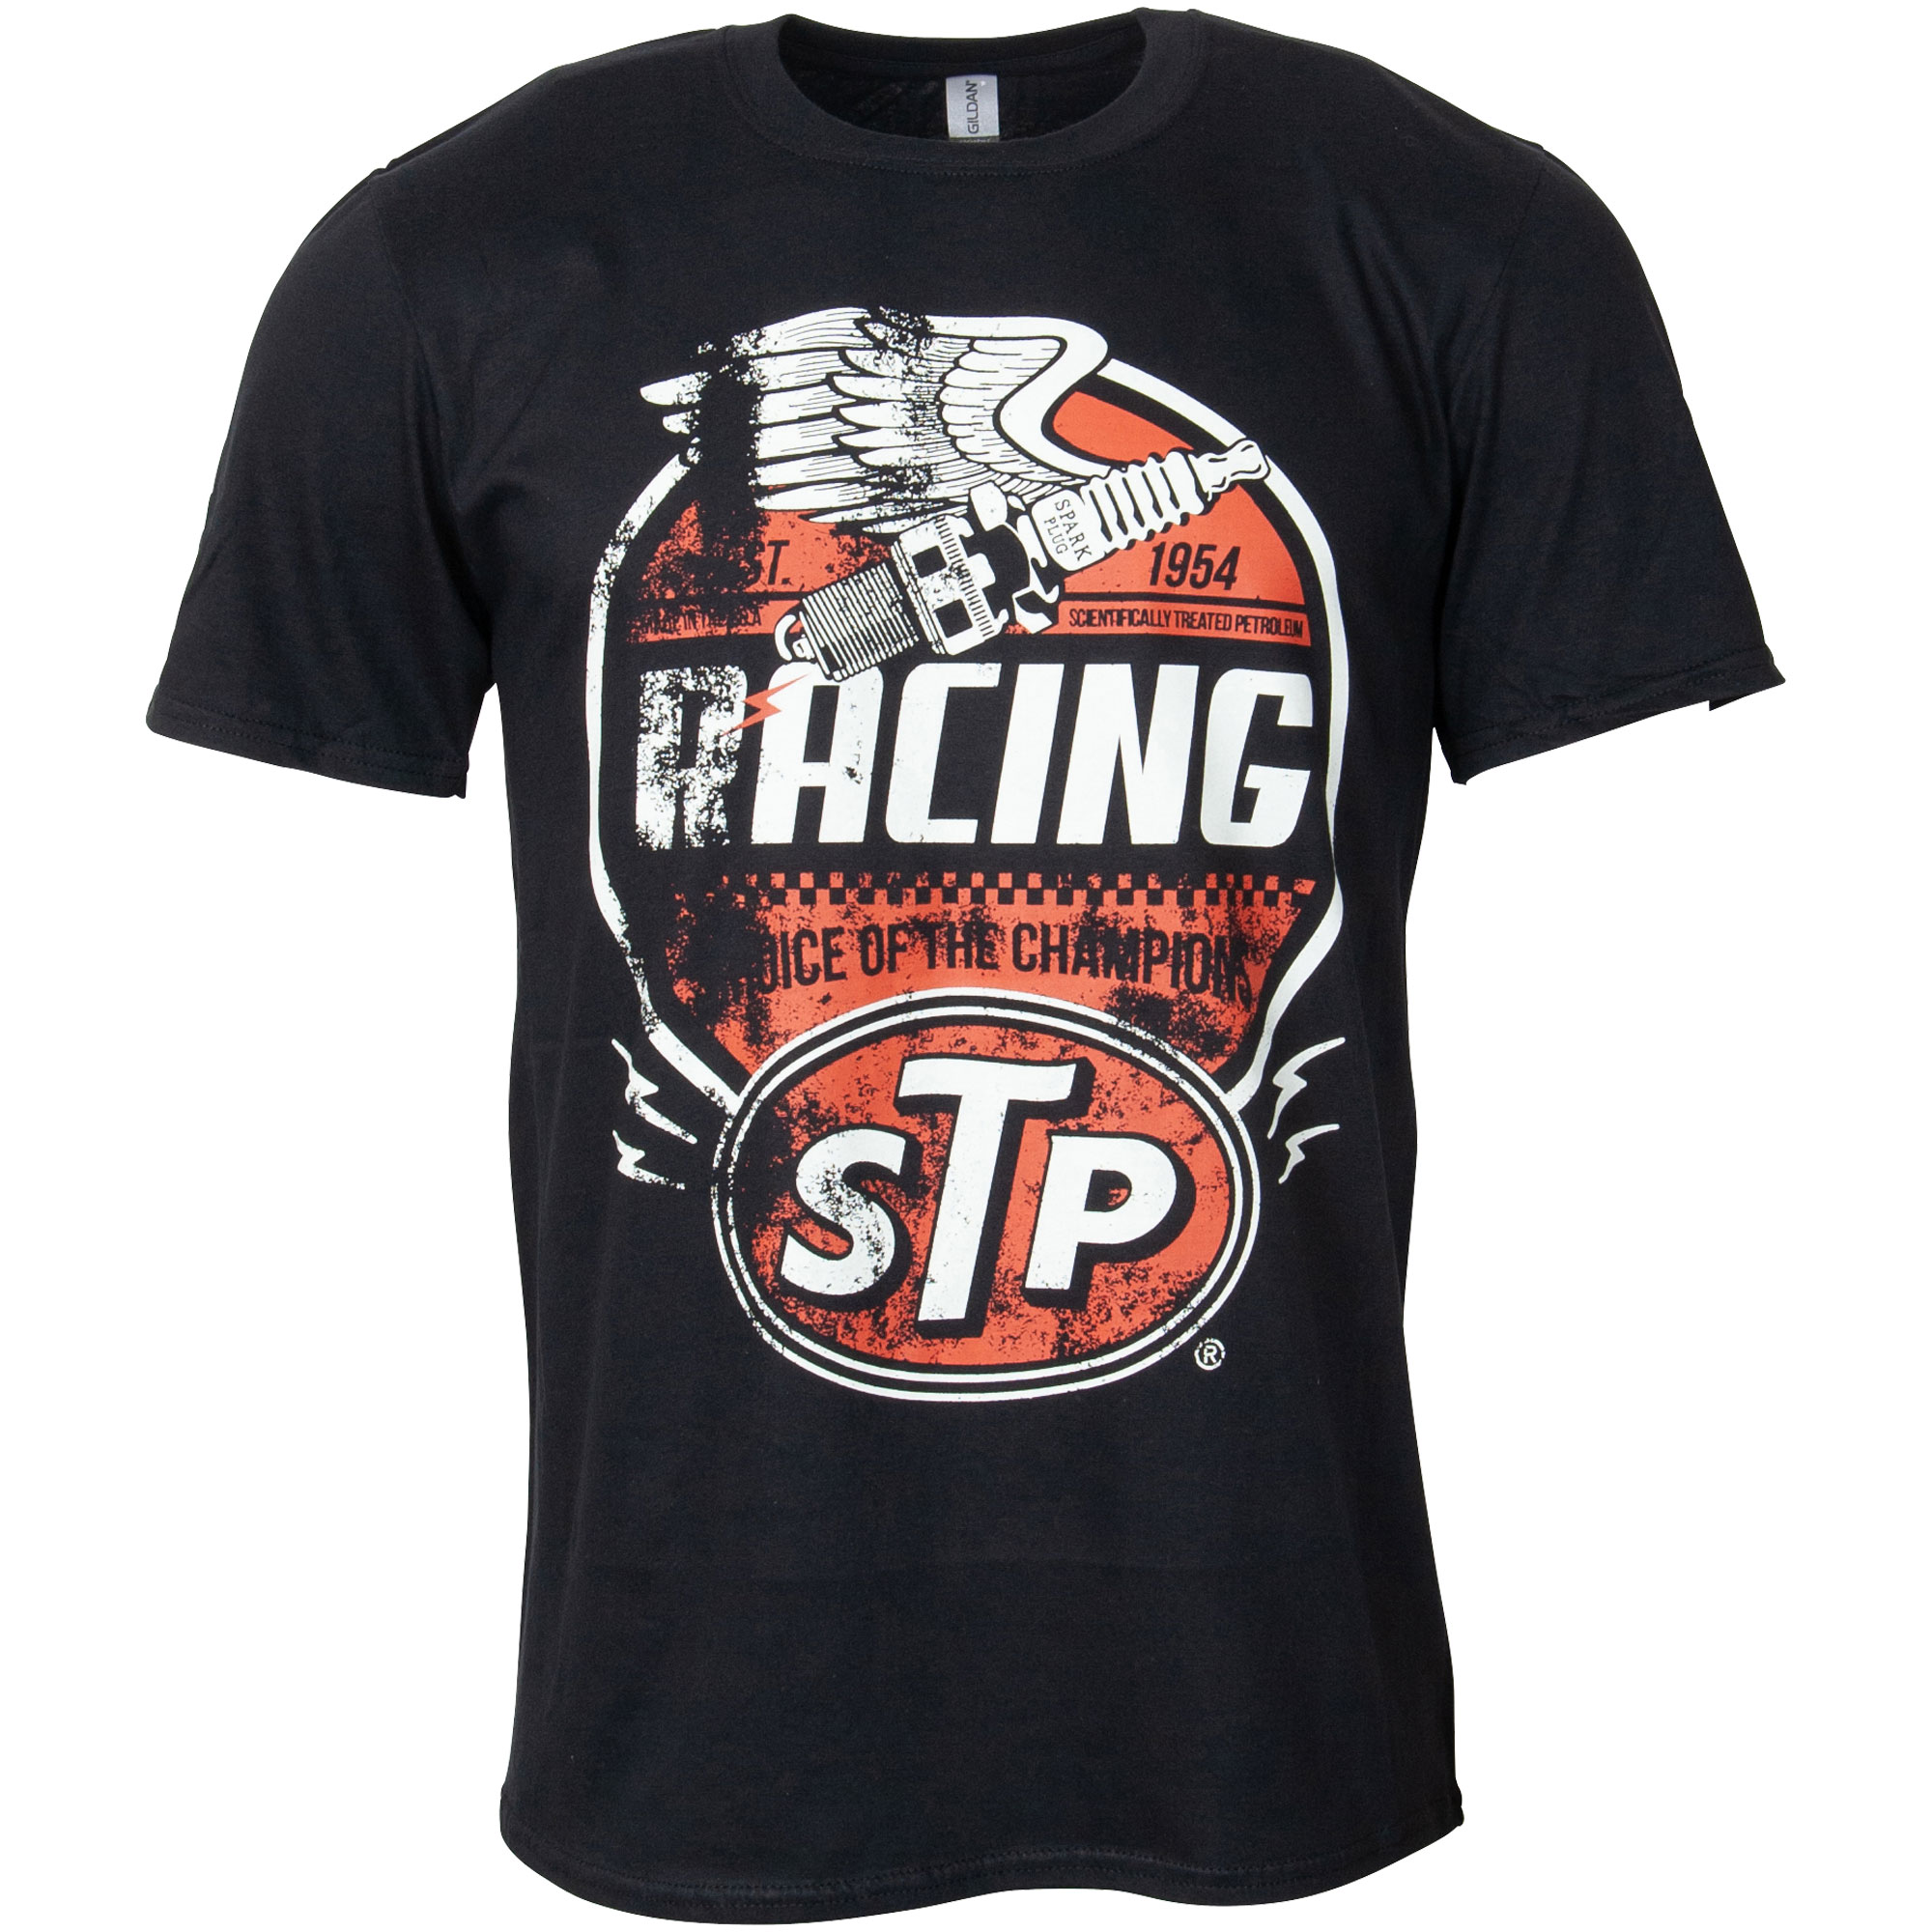 STP vintage t-shirt "Racing" - black